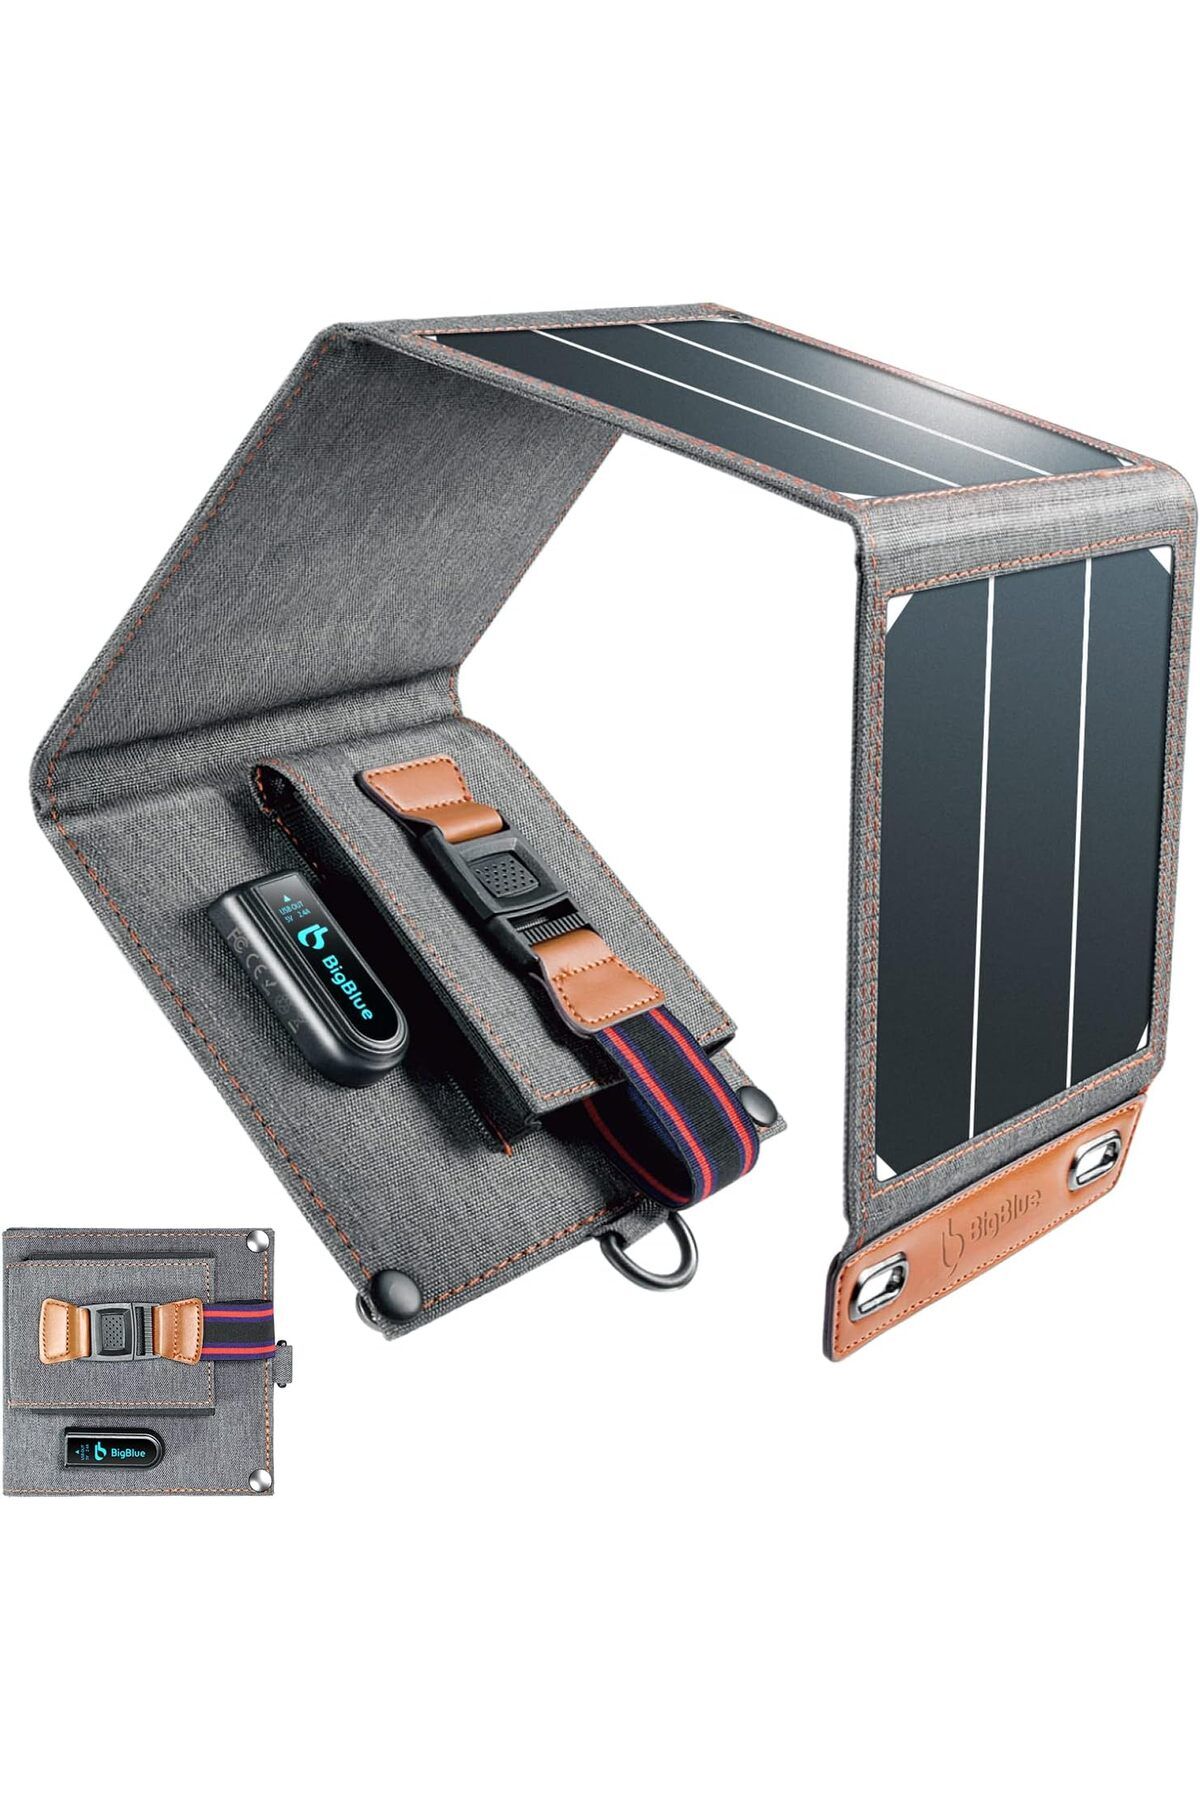 Bigblue 14W solar şarj cihazı taşınabilir, cep boyutunda güneş paneli 1 portlu USB